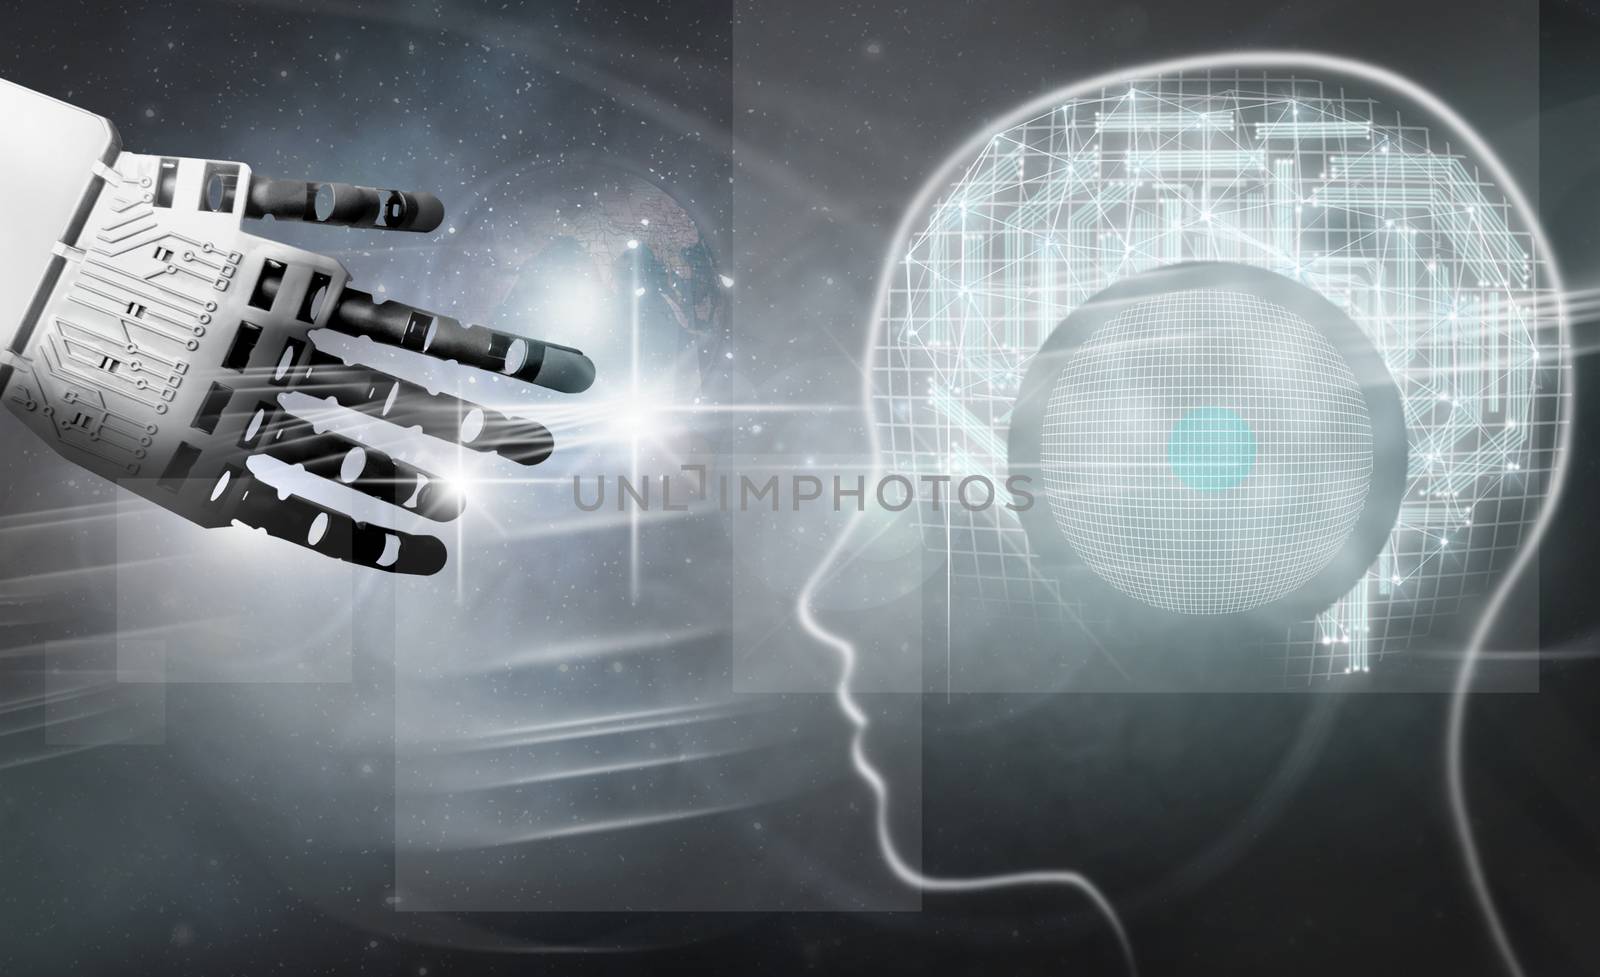 Robot hand reaching towards brain made of circuits